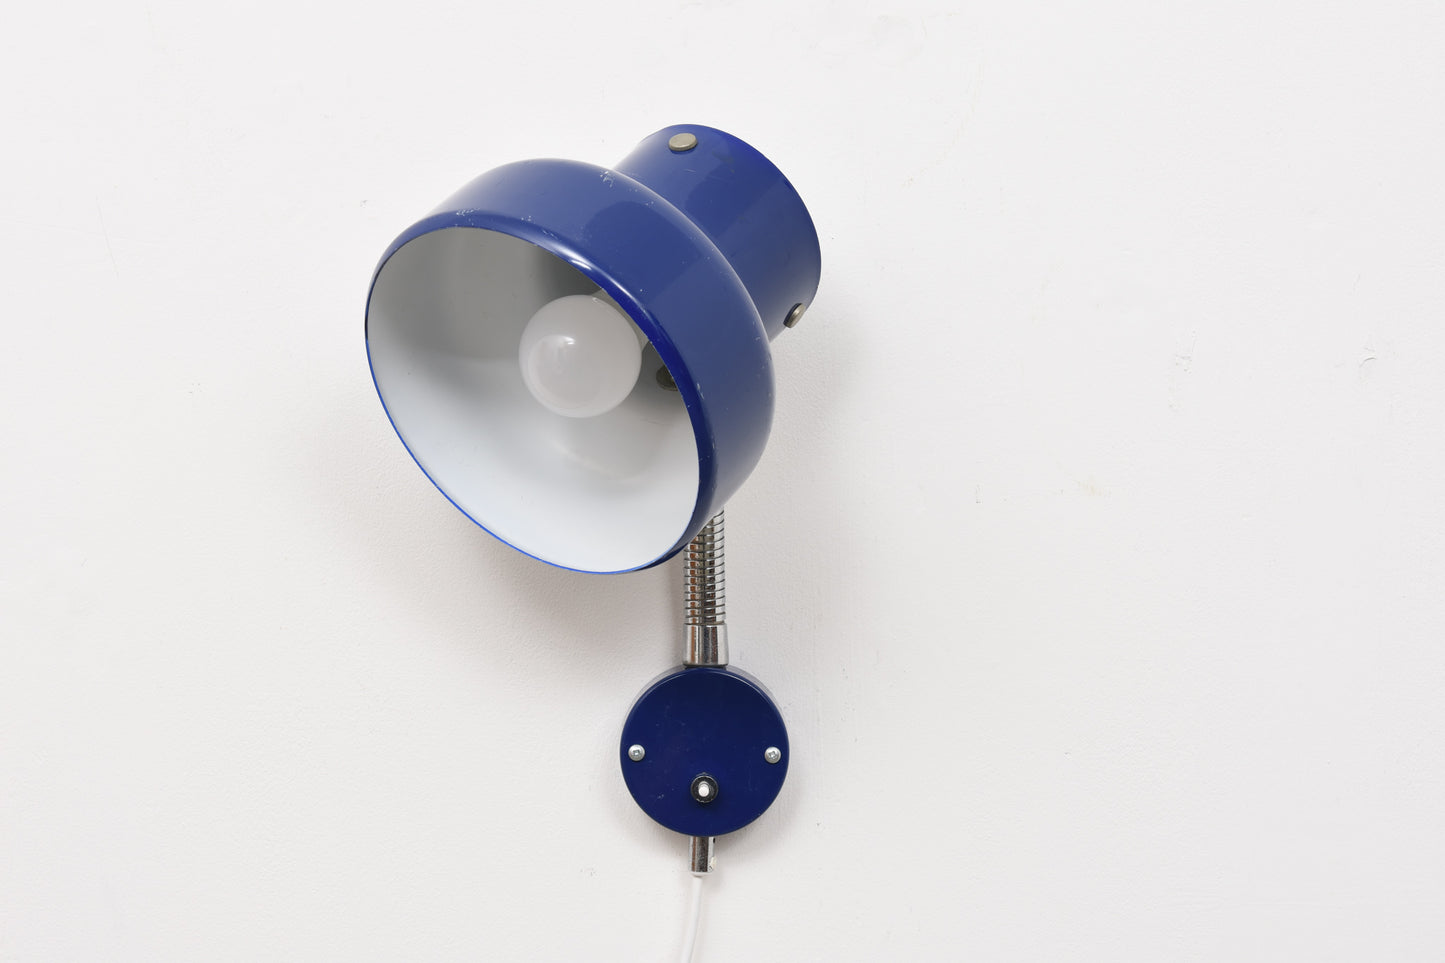 Vintage Bumling wall lamp by Ateljé Lyktan - Blue